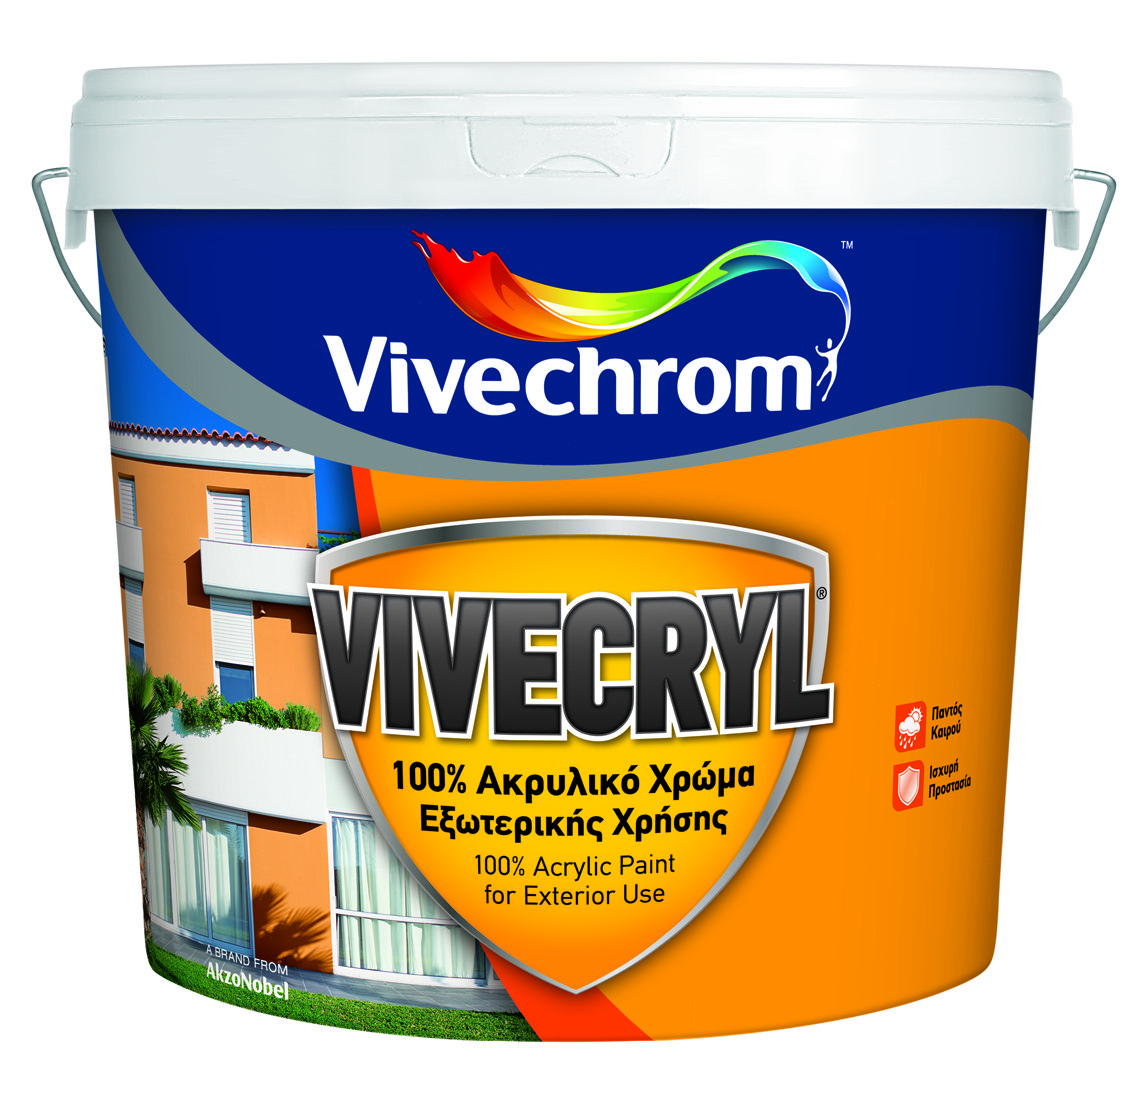 Vivechrom Vivecryl Ακρυλικό Οικολογικό Χρώμα Matt Finish Λευκό 10L